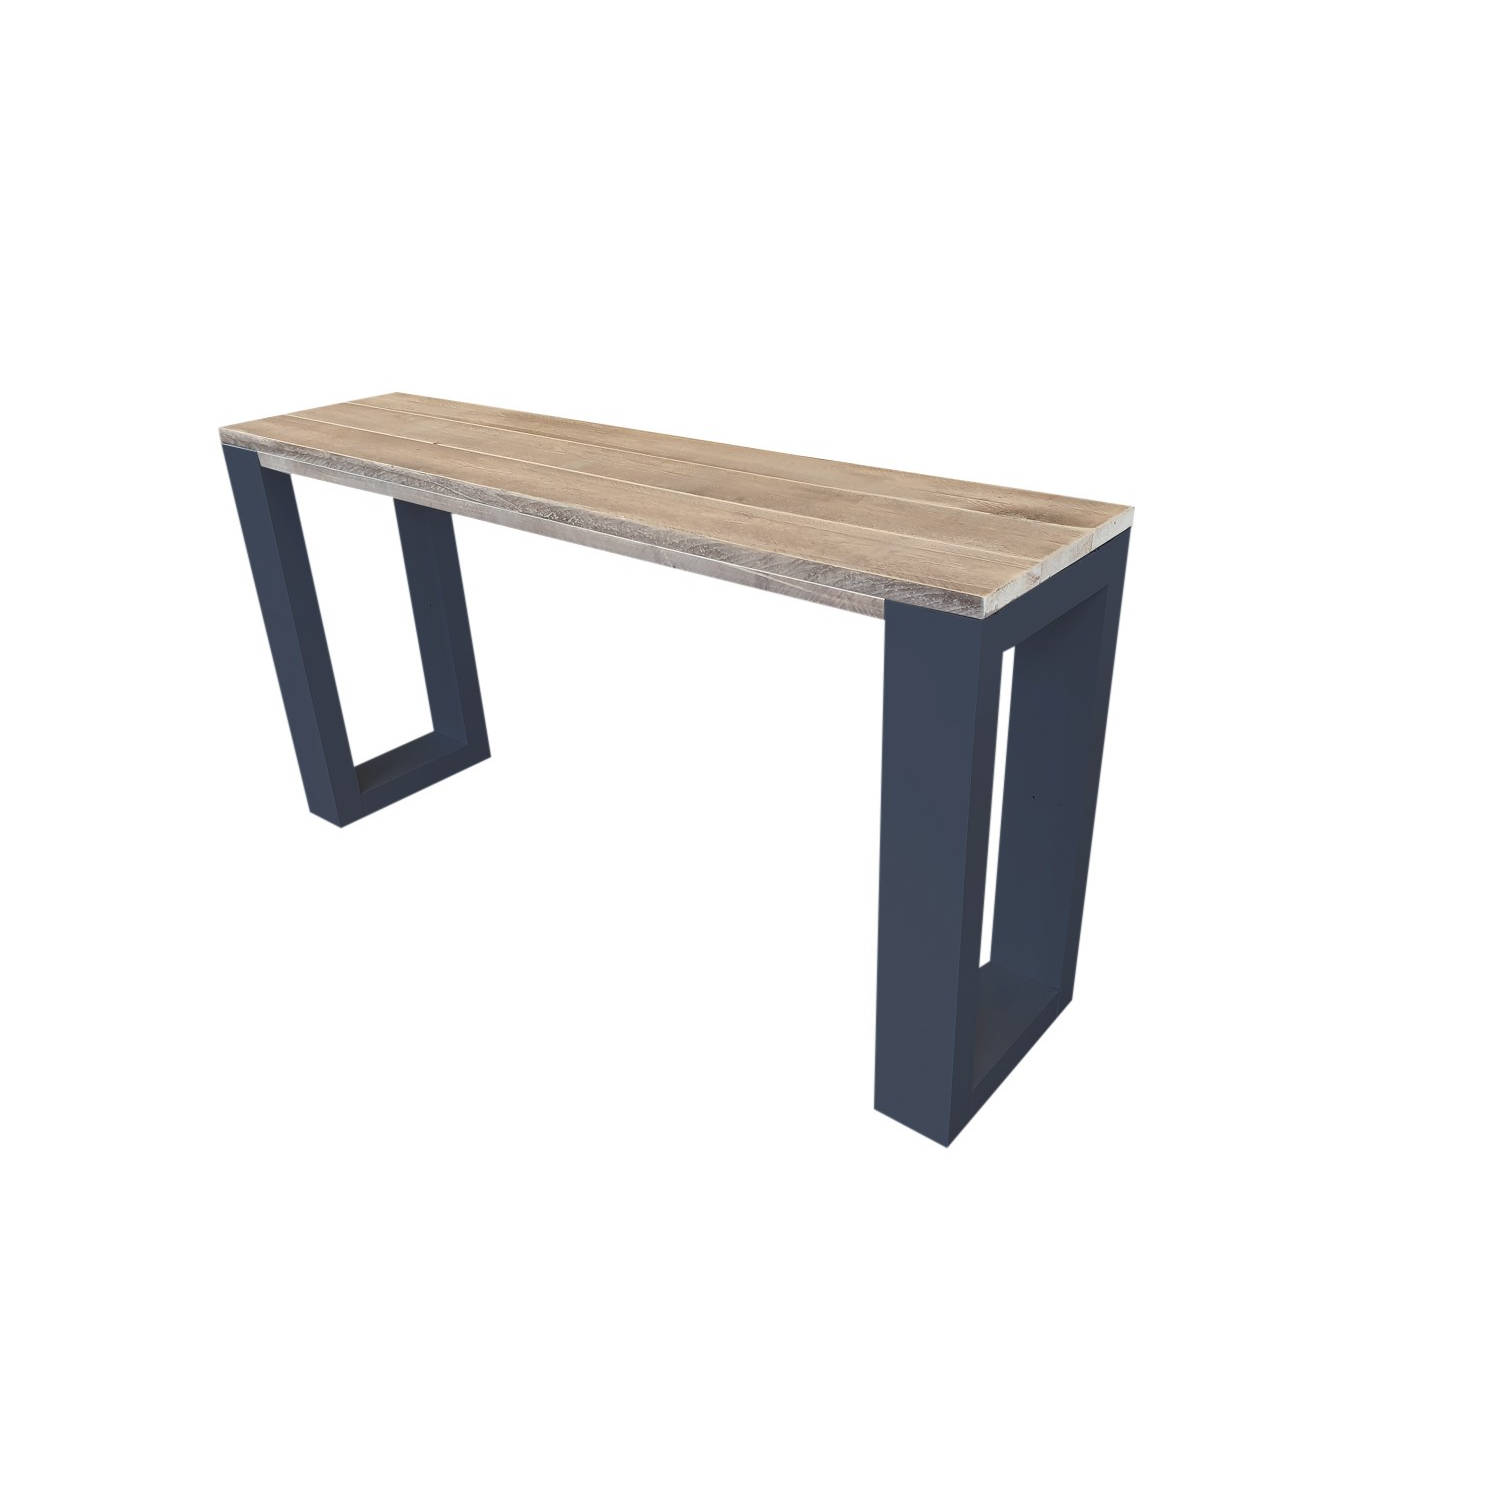 Wood4you Side table enkel steigerhout - Antraciet Eettafels 170 cm Bijzettafel